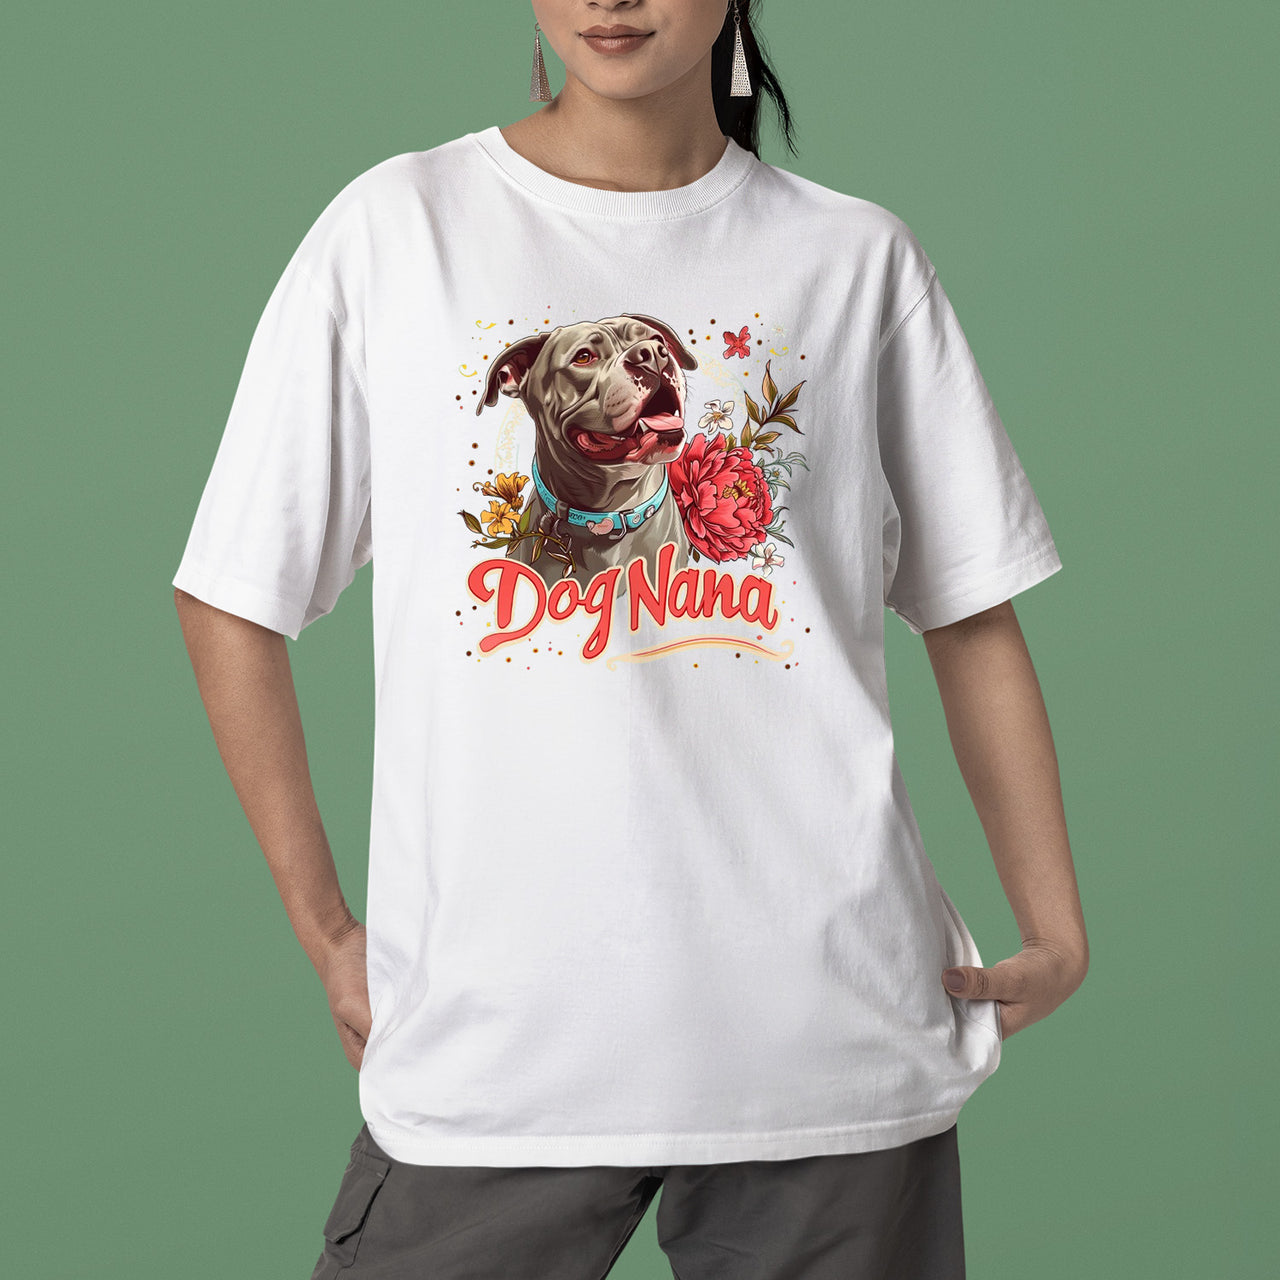 Pit Pull Dog T-shirt, Pet Lover Shirt, Dog Lover Shirt, Dog Nana  T-Shirt, Dog Owner Shirt, Gift For Dog Grandma, Funny Dog Shirts, Women Dog T-Shirt, Mother's Day Gift, Dog Lover Wife Gifts, Dog Shirt 01